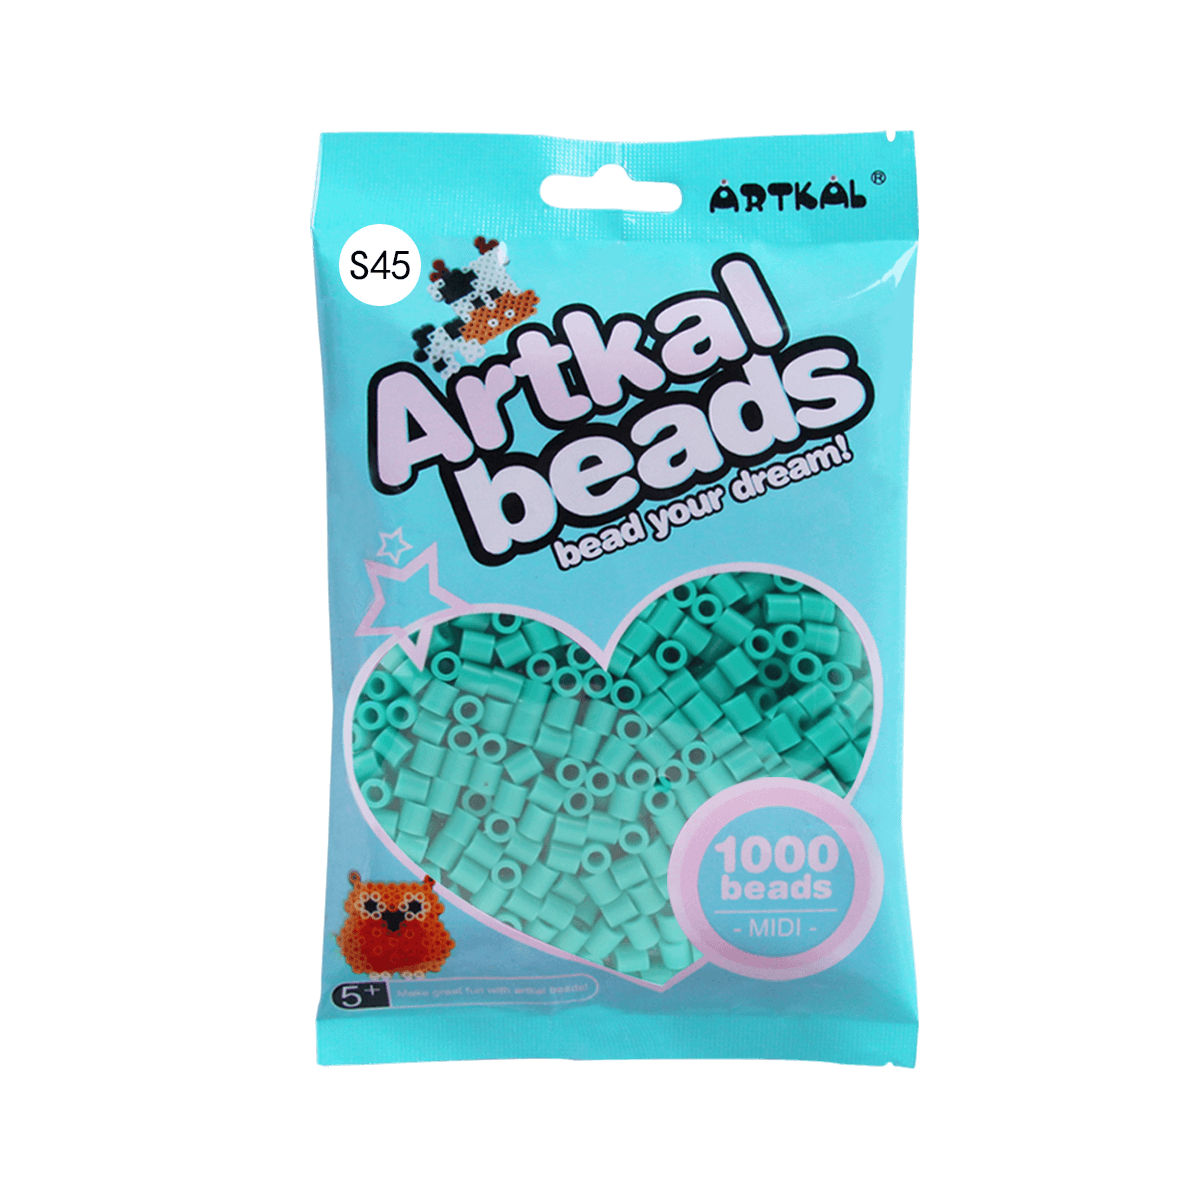 Turquoise-Midi 1000 beads Single Pack